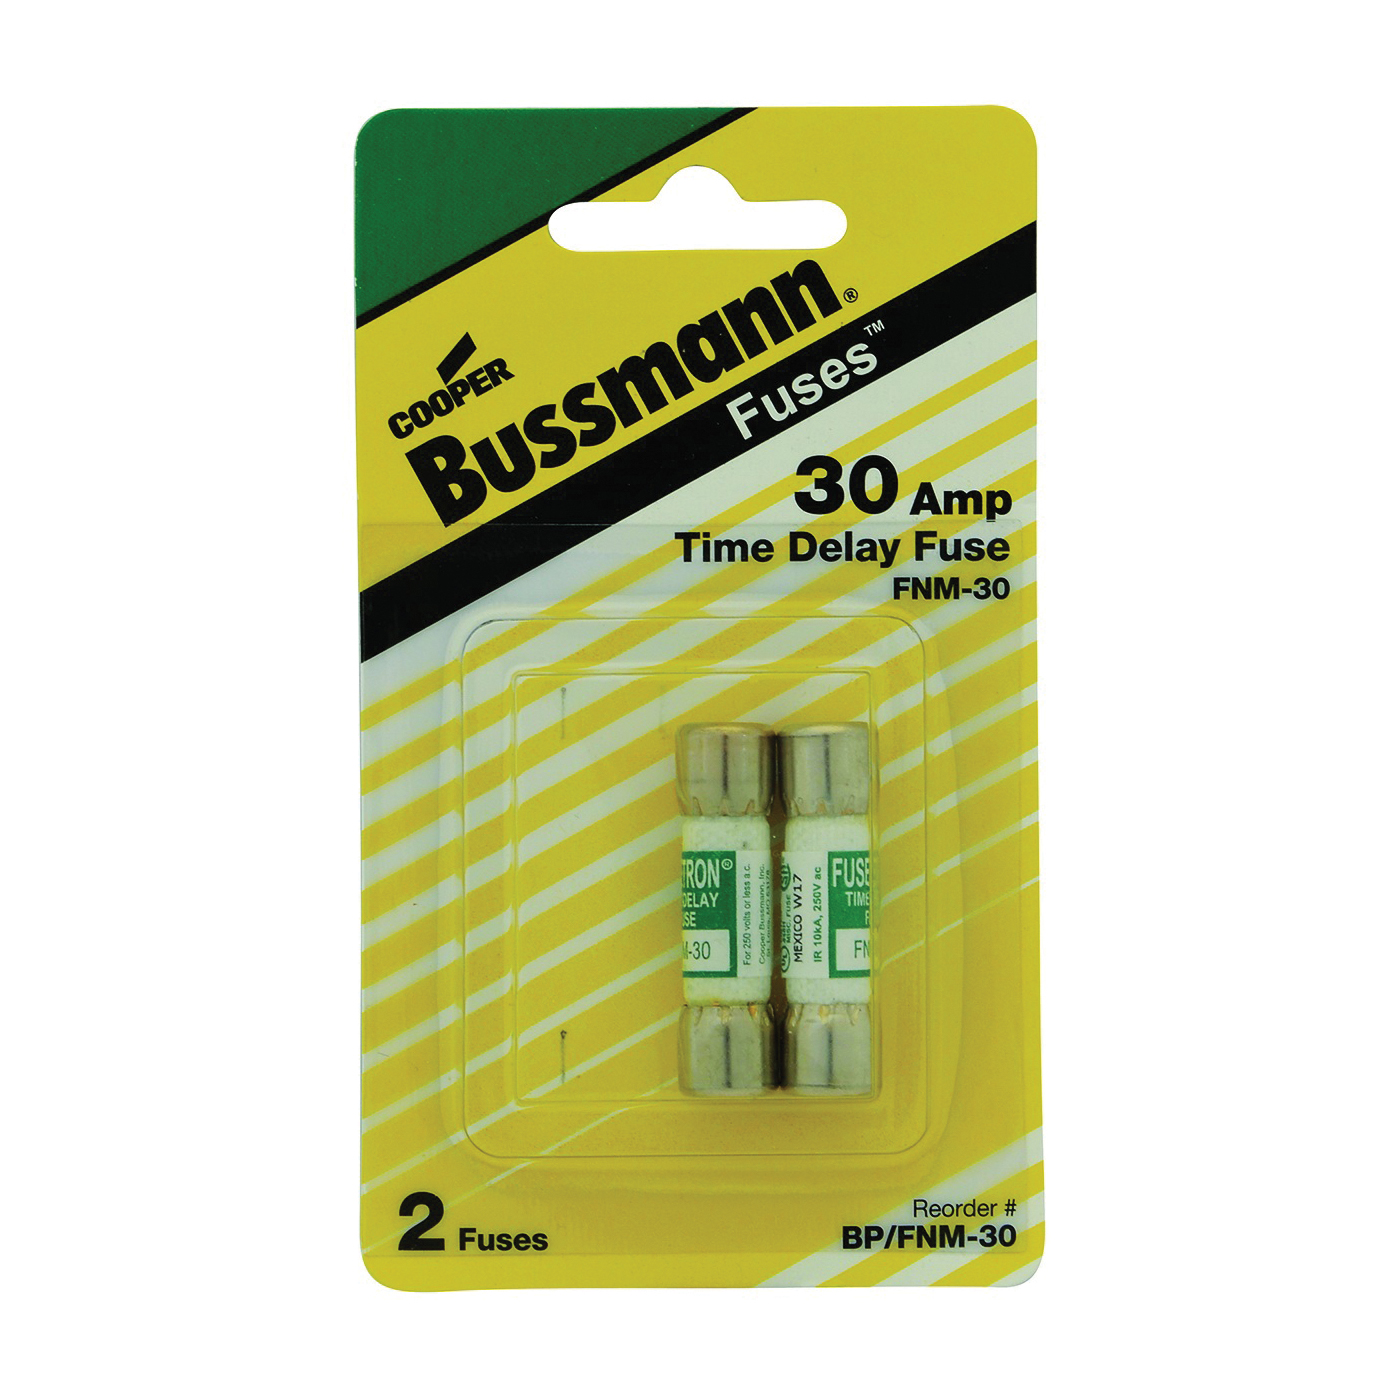 Bussmann BP/FNM-30 Time Delay Fuse, 30 A, 250 V, 10 kA Interrupt, Melamine Body